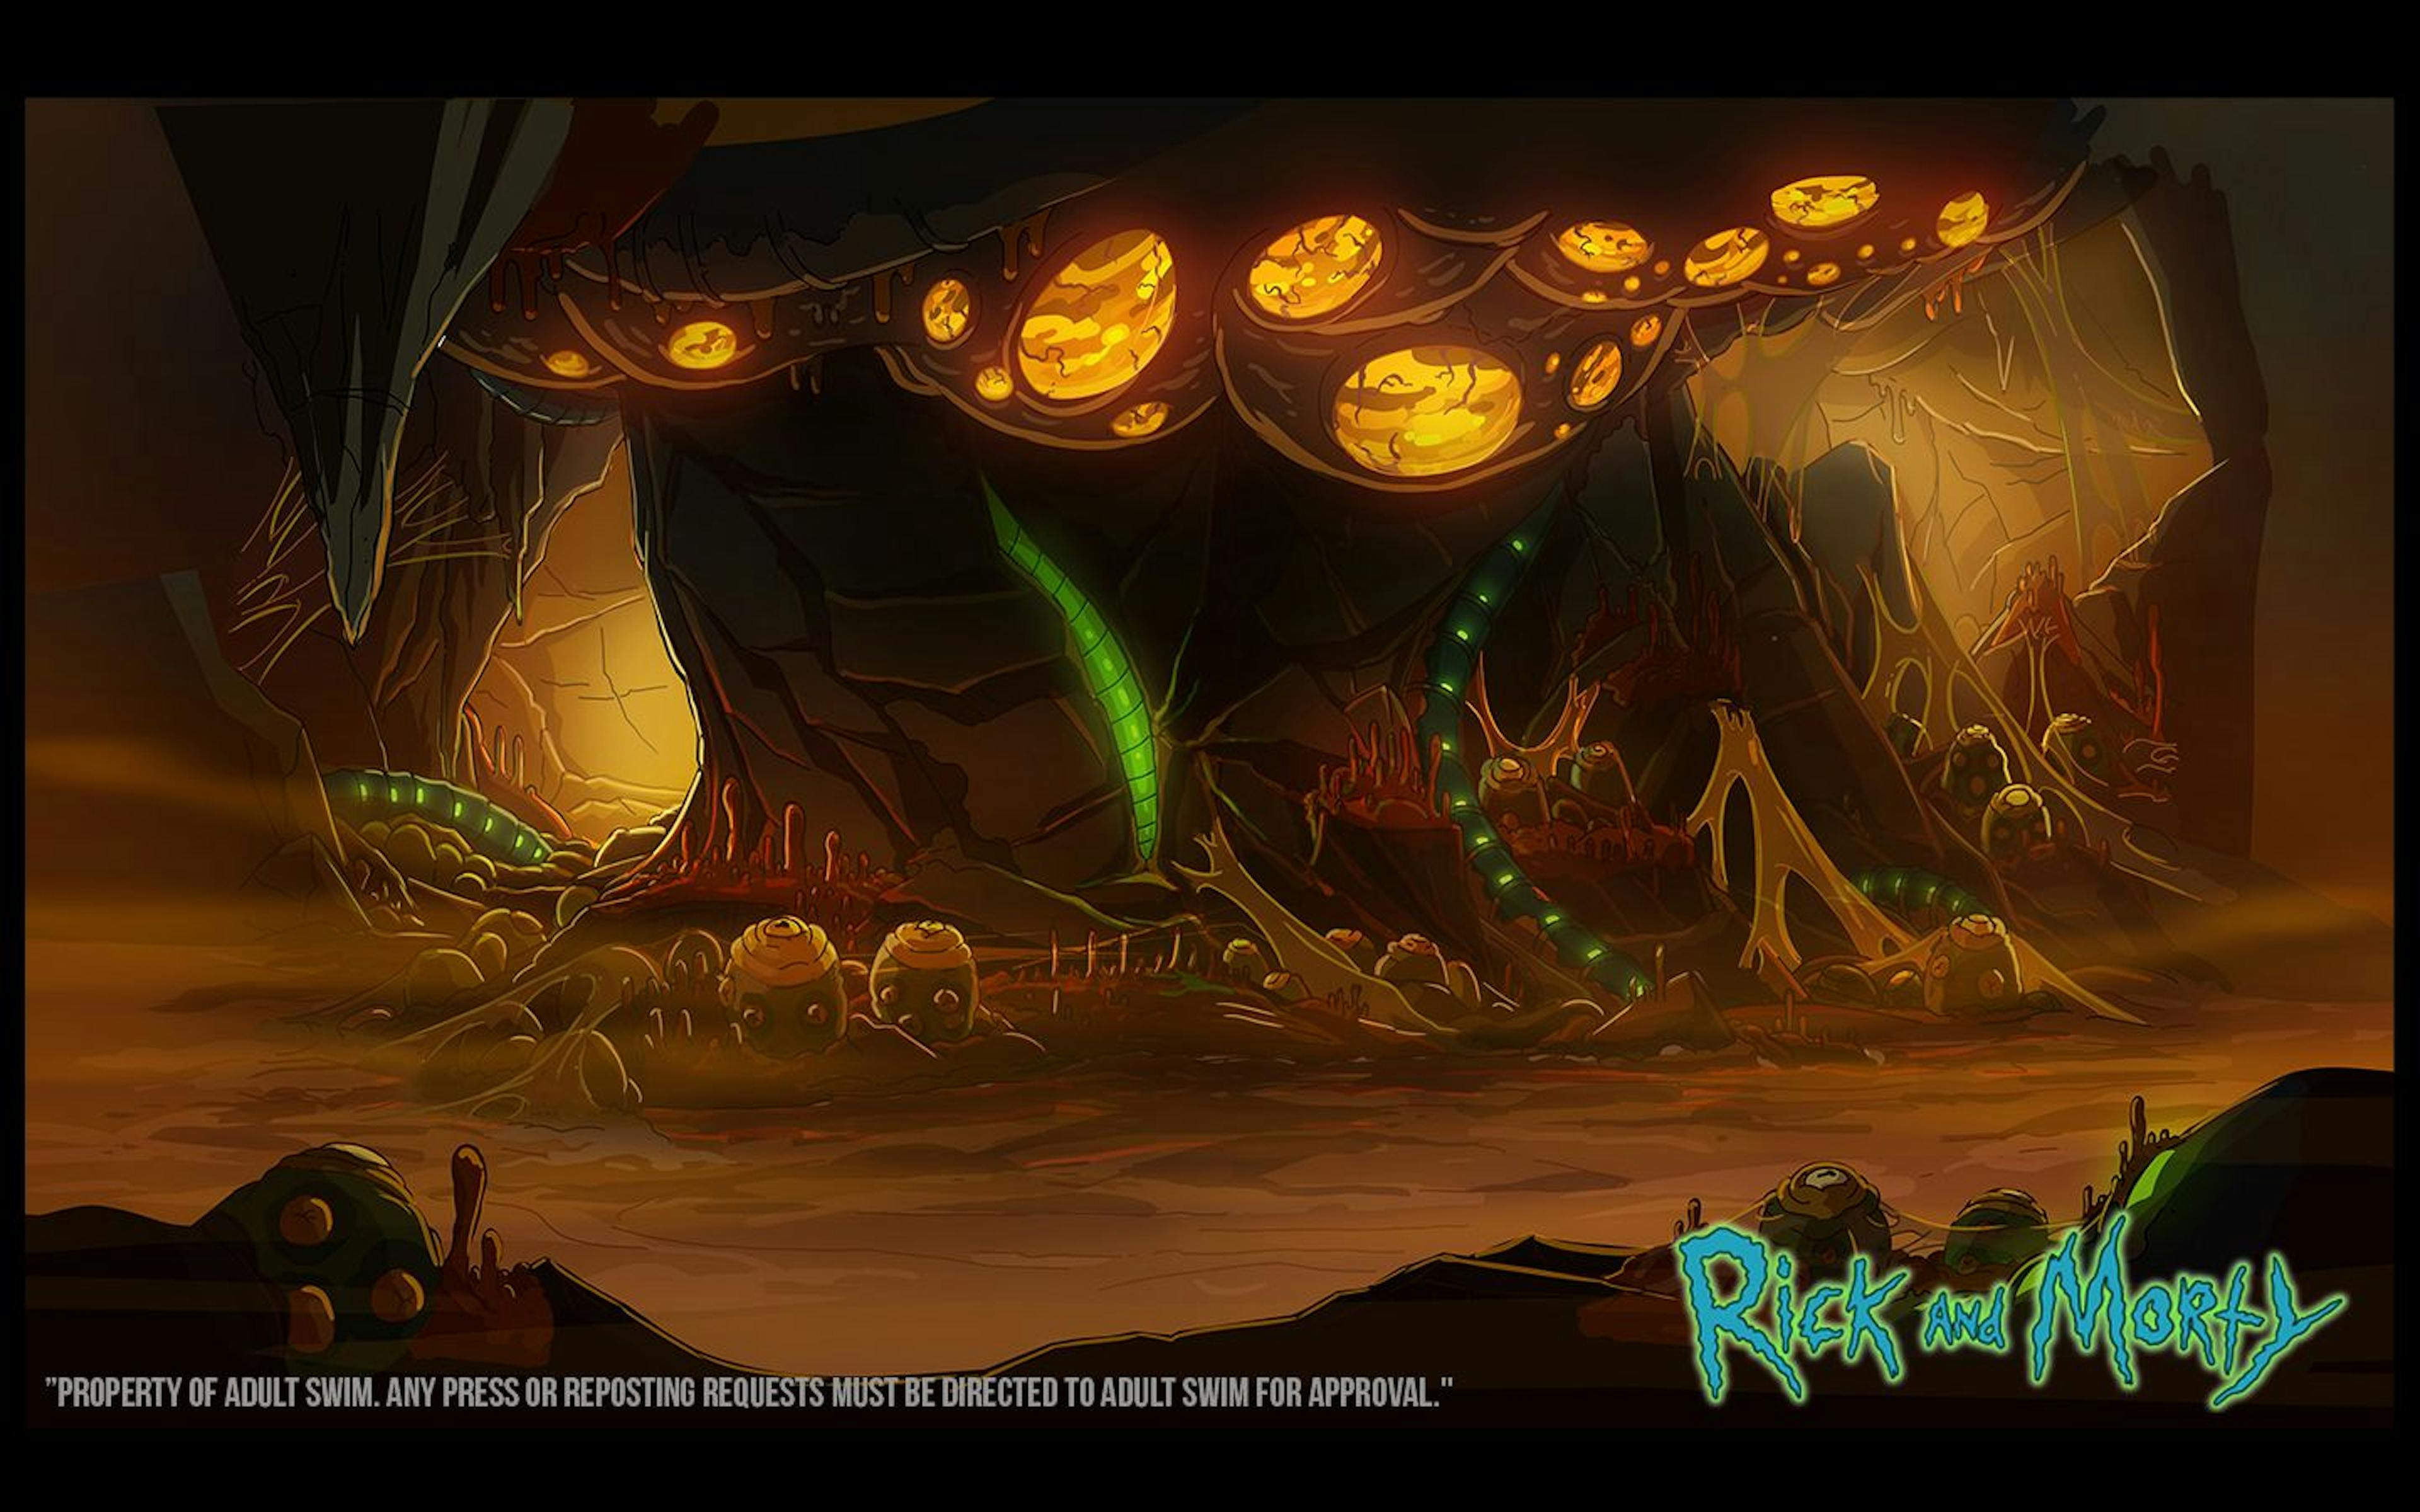 A Rick & Morty alien background